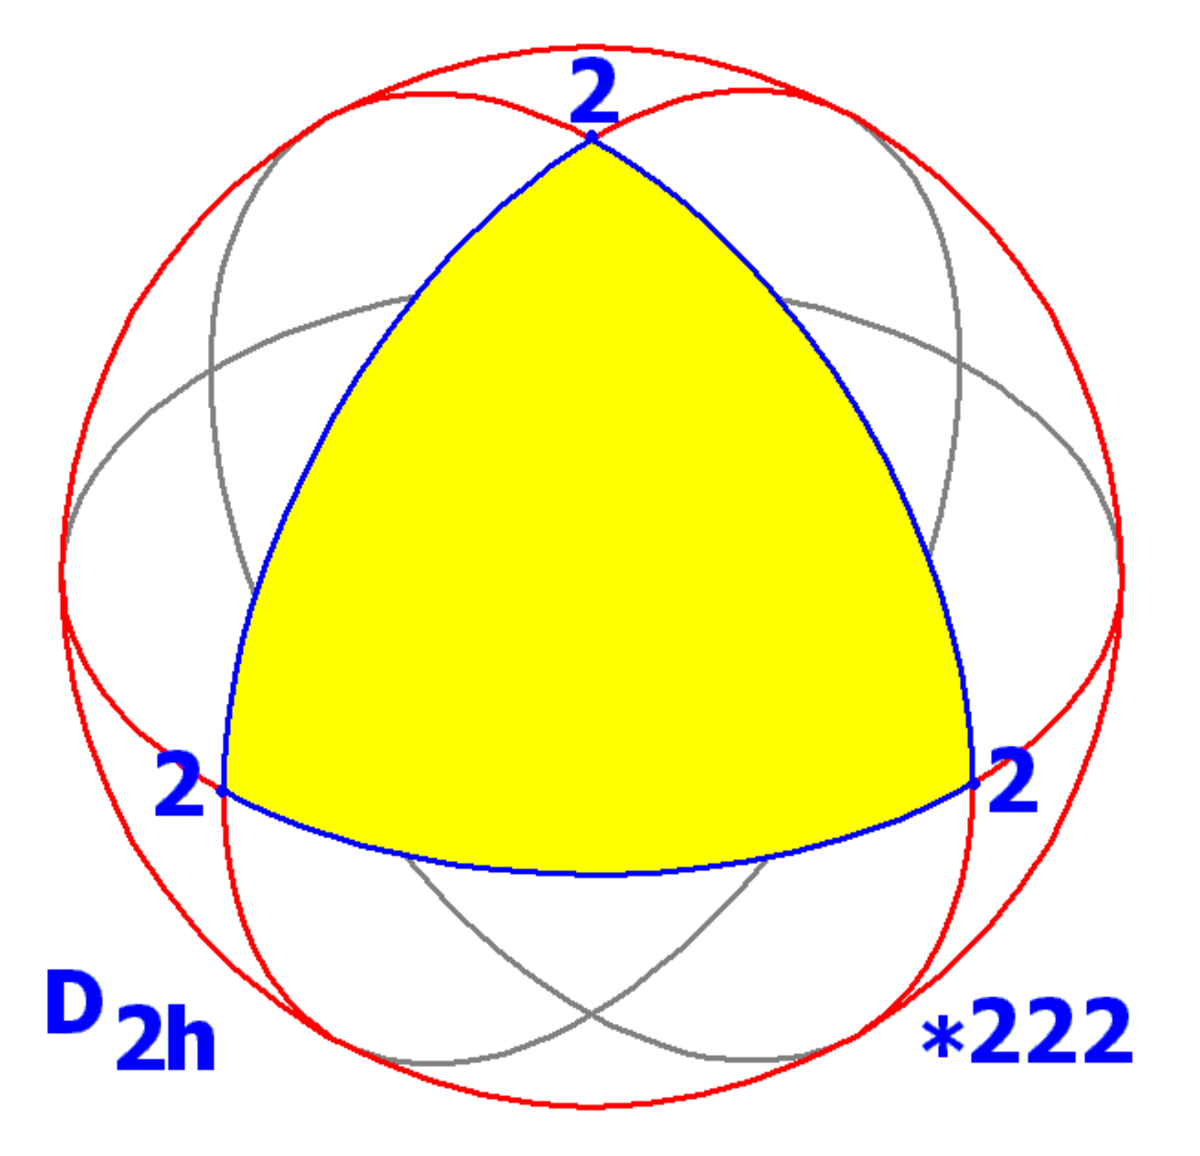 Sphere symmetry group d2h.png